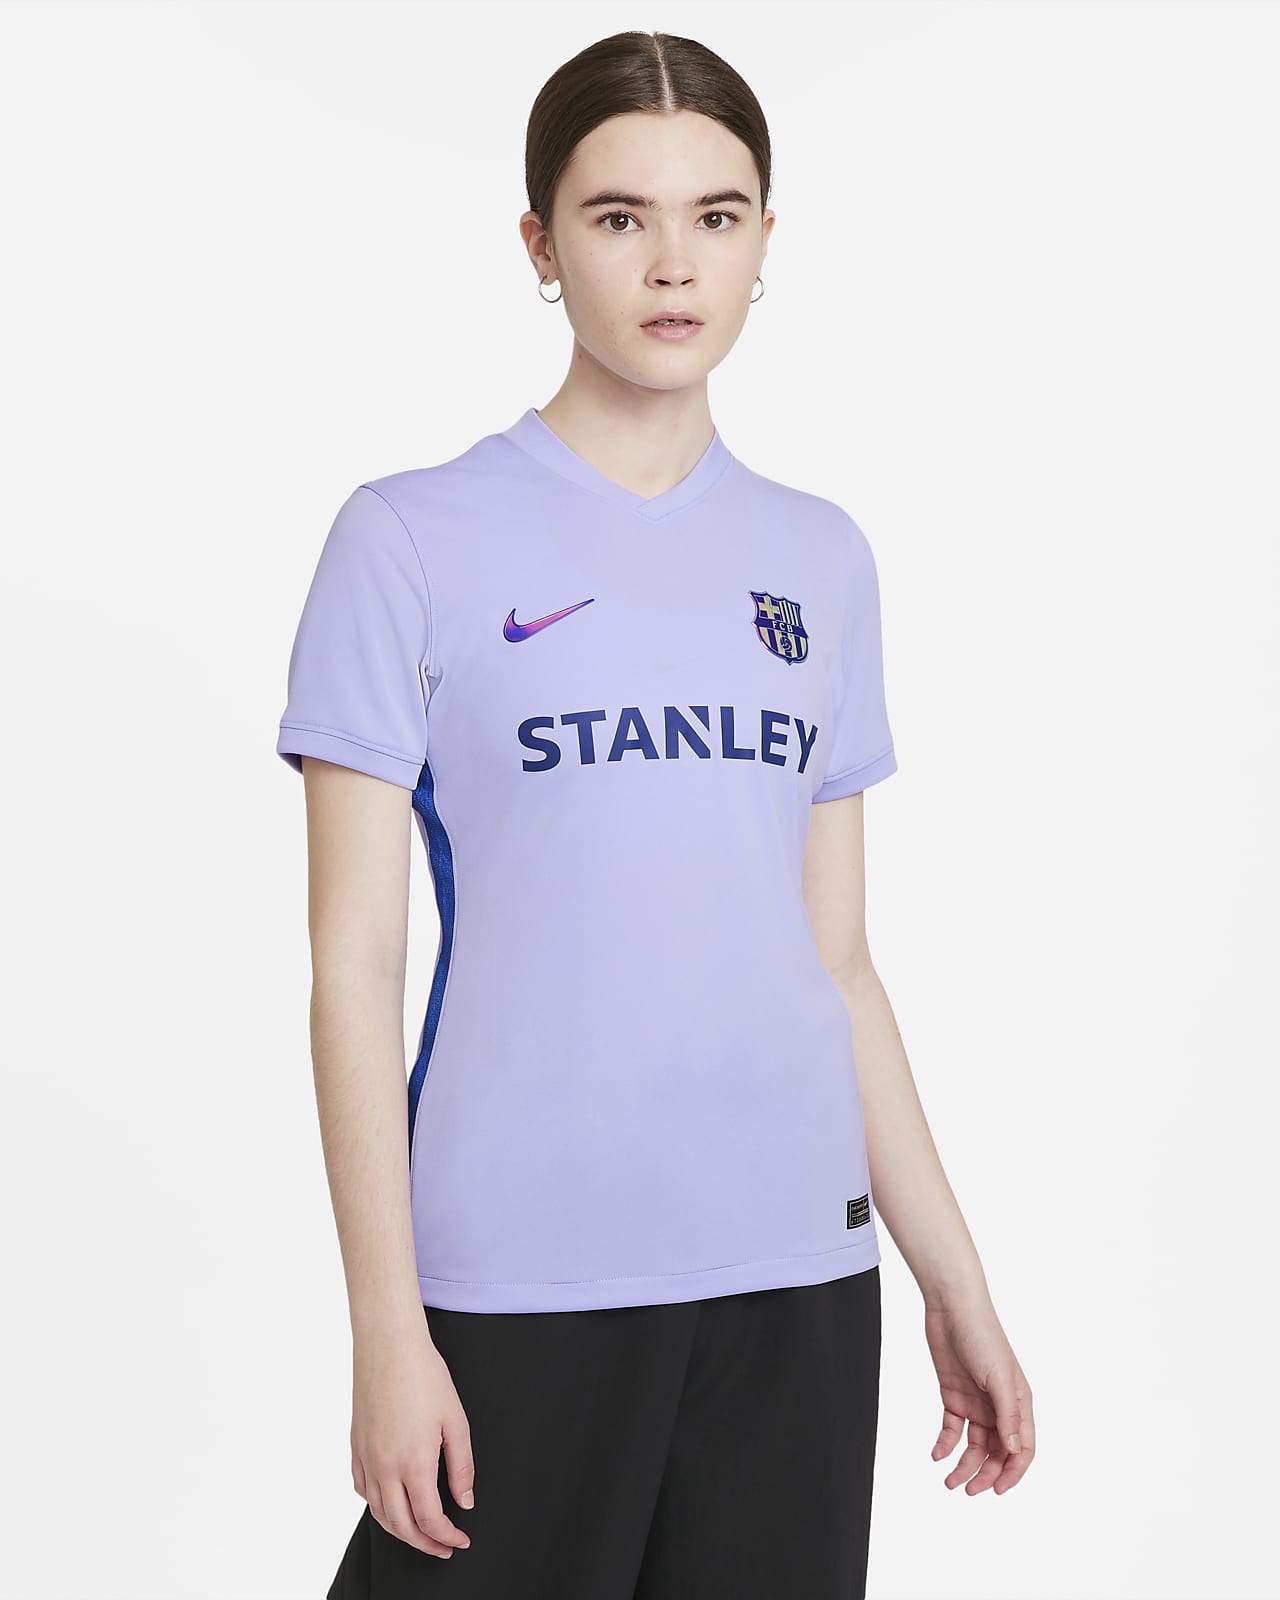 F.C. Barcelona 2021/22 Stadium Away Women's Nike Dri-FIT Football Shirt